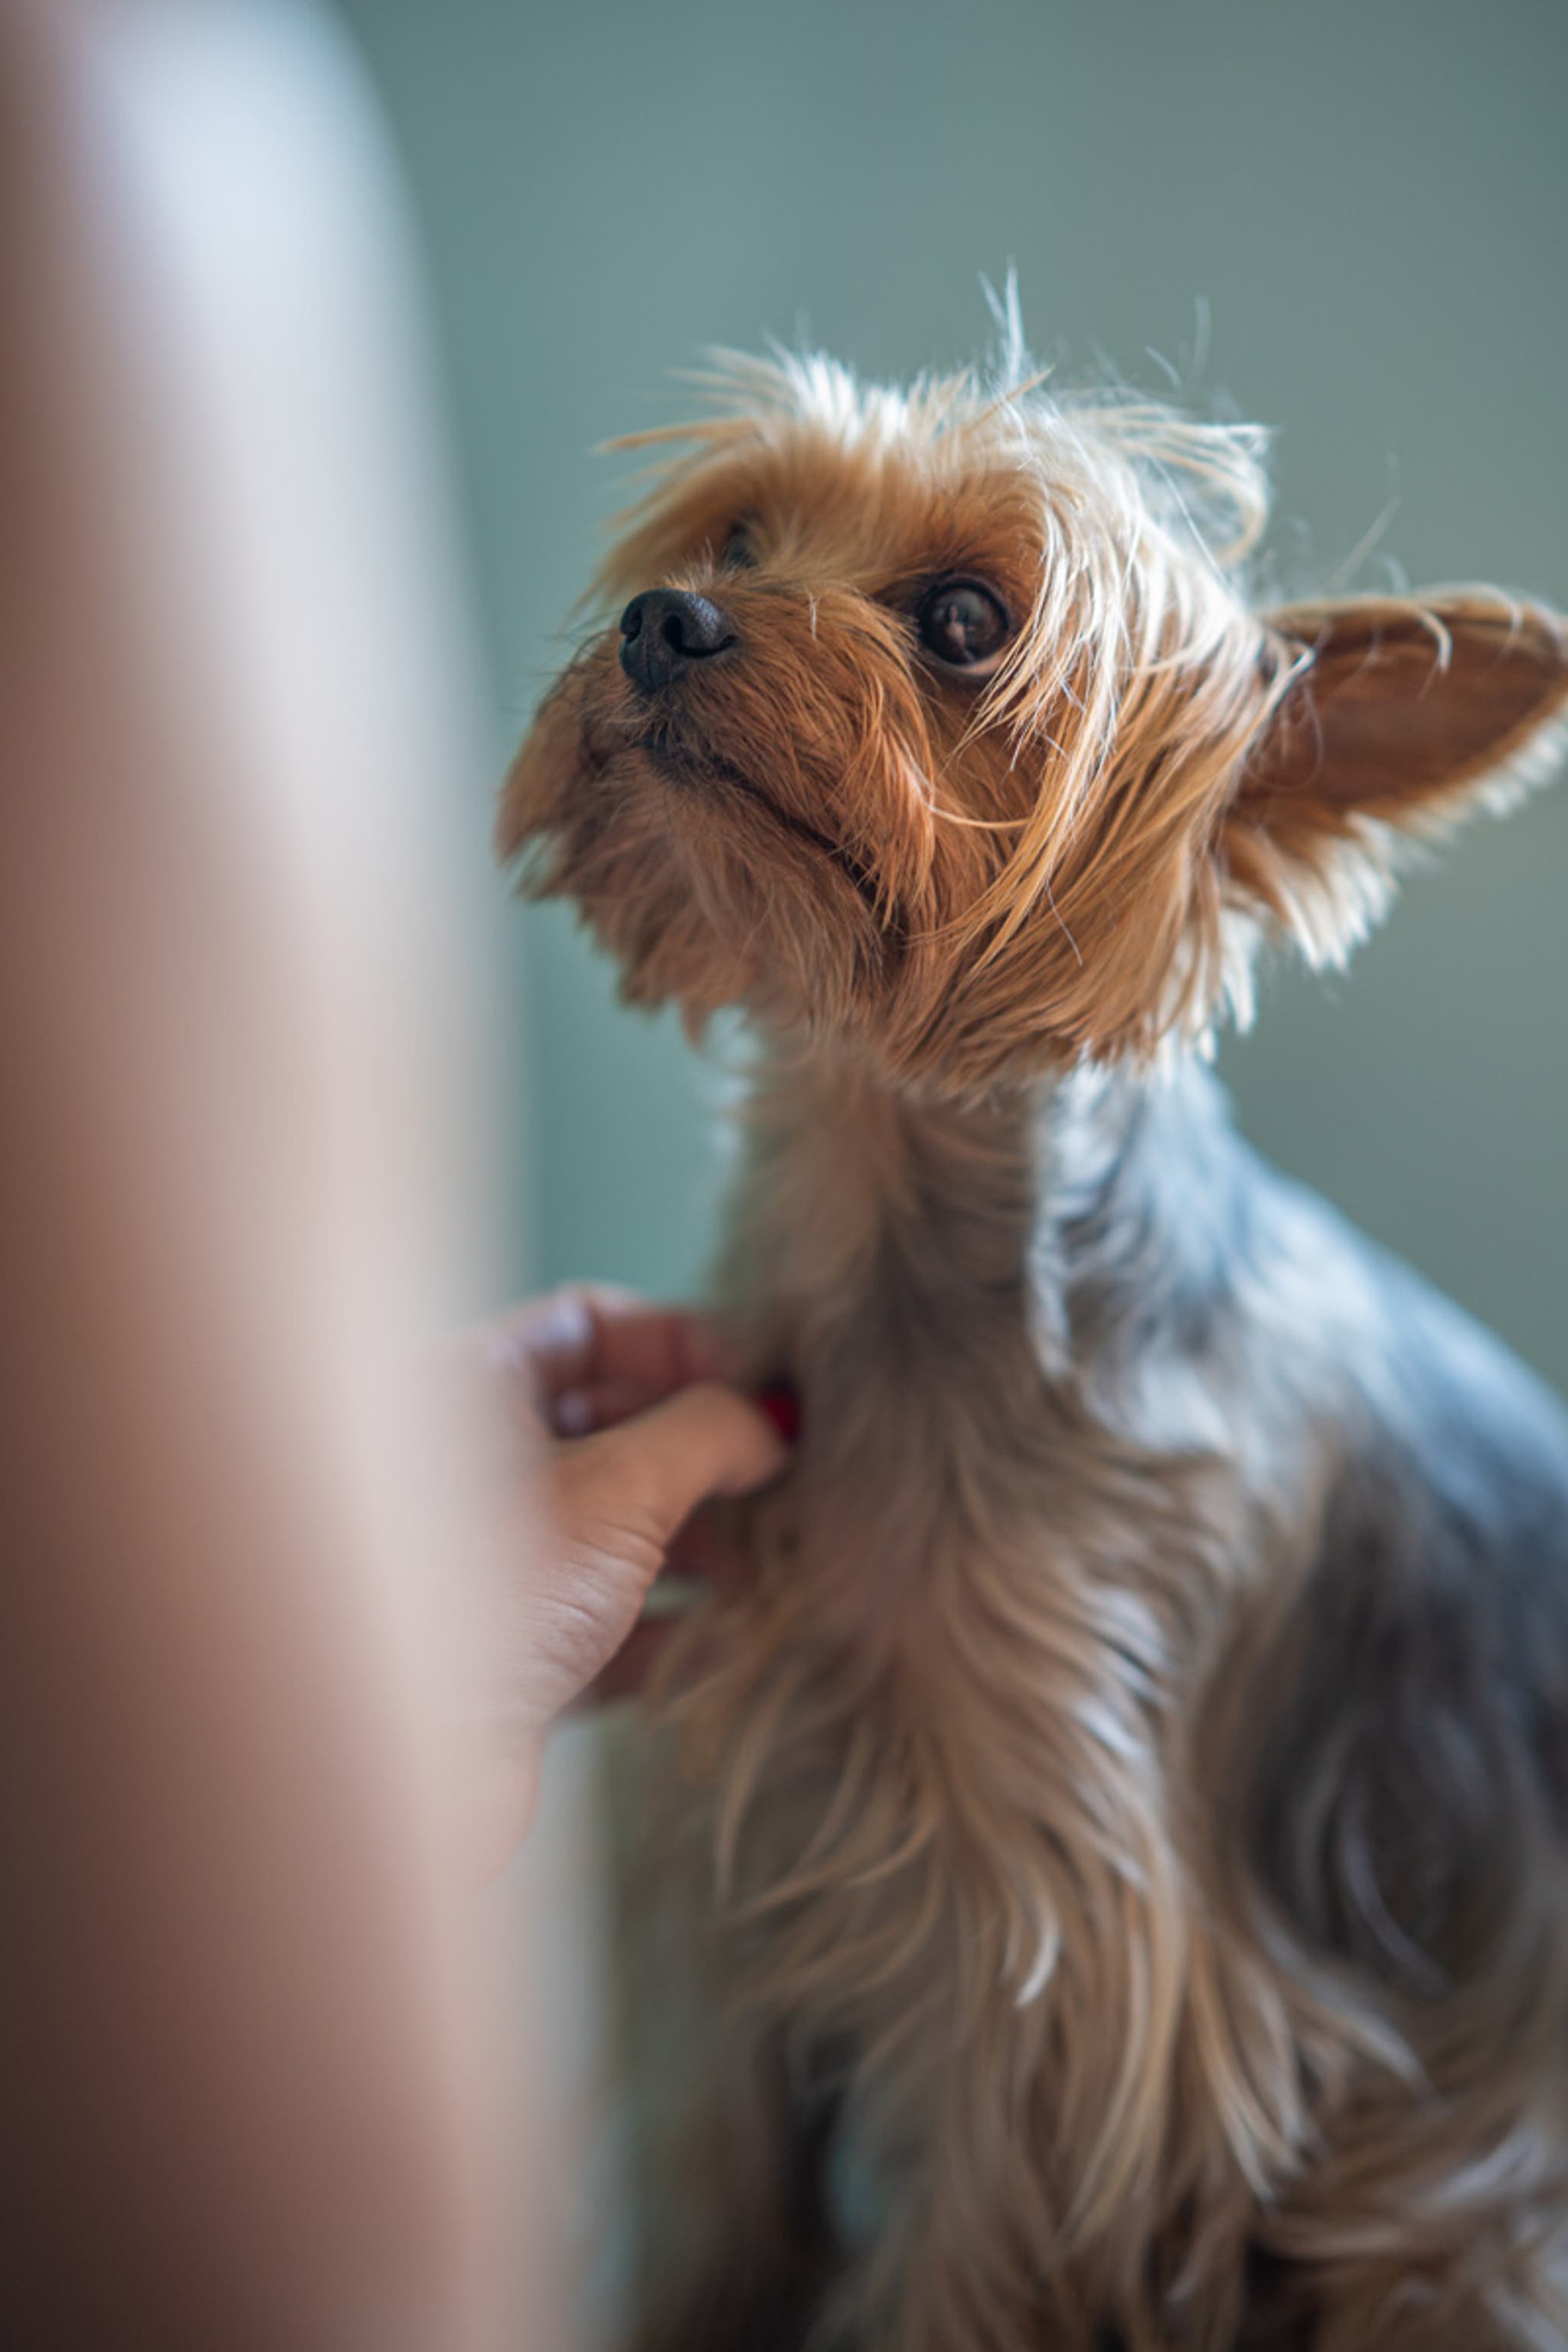 How LAVERDIA-CA1 (verdinexor) Helps Dogs with Lymphoma